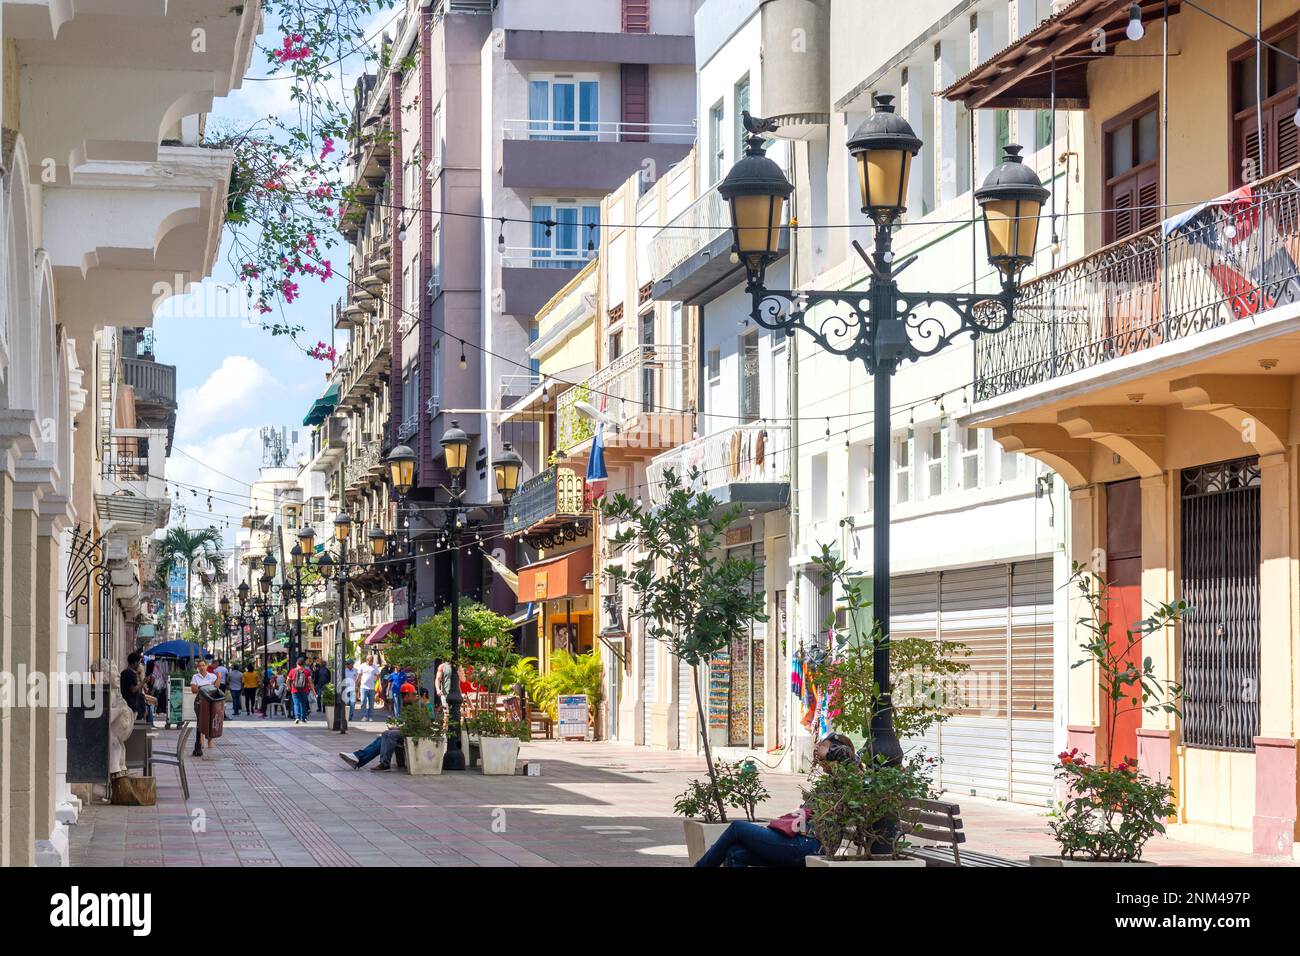 Pedestrianised Calle El Conde, Santo Domingo, Dominican Republic (Republica Dominicana), Greater Antilles, Caribbean Stock Photo